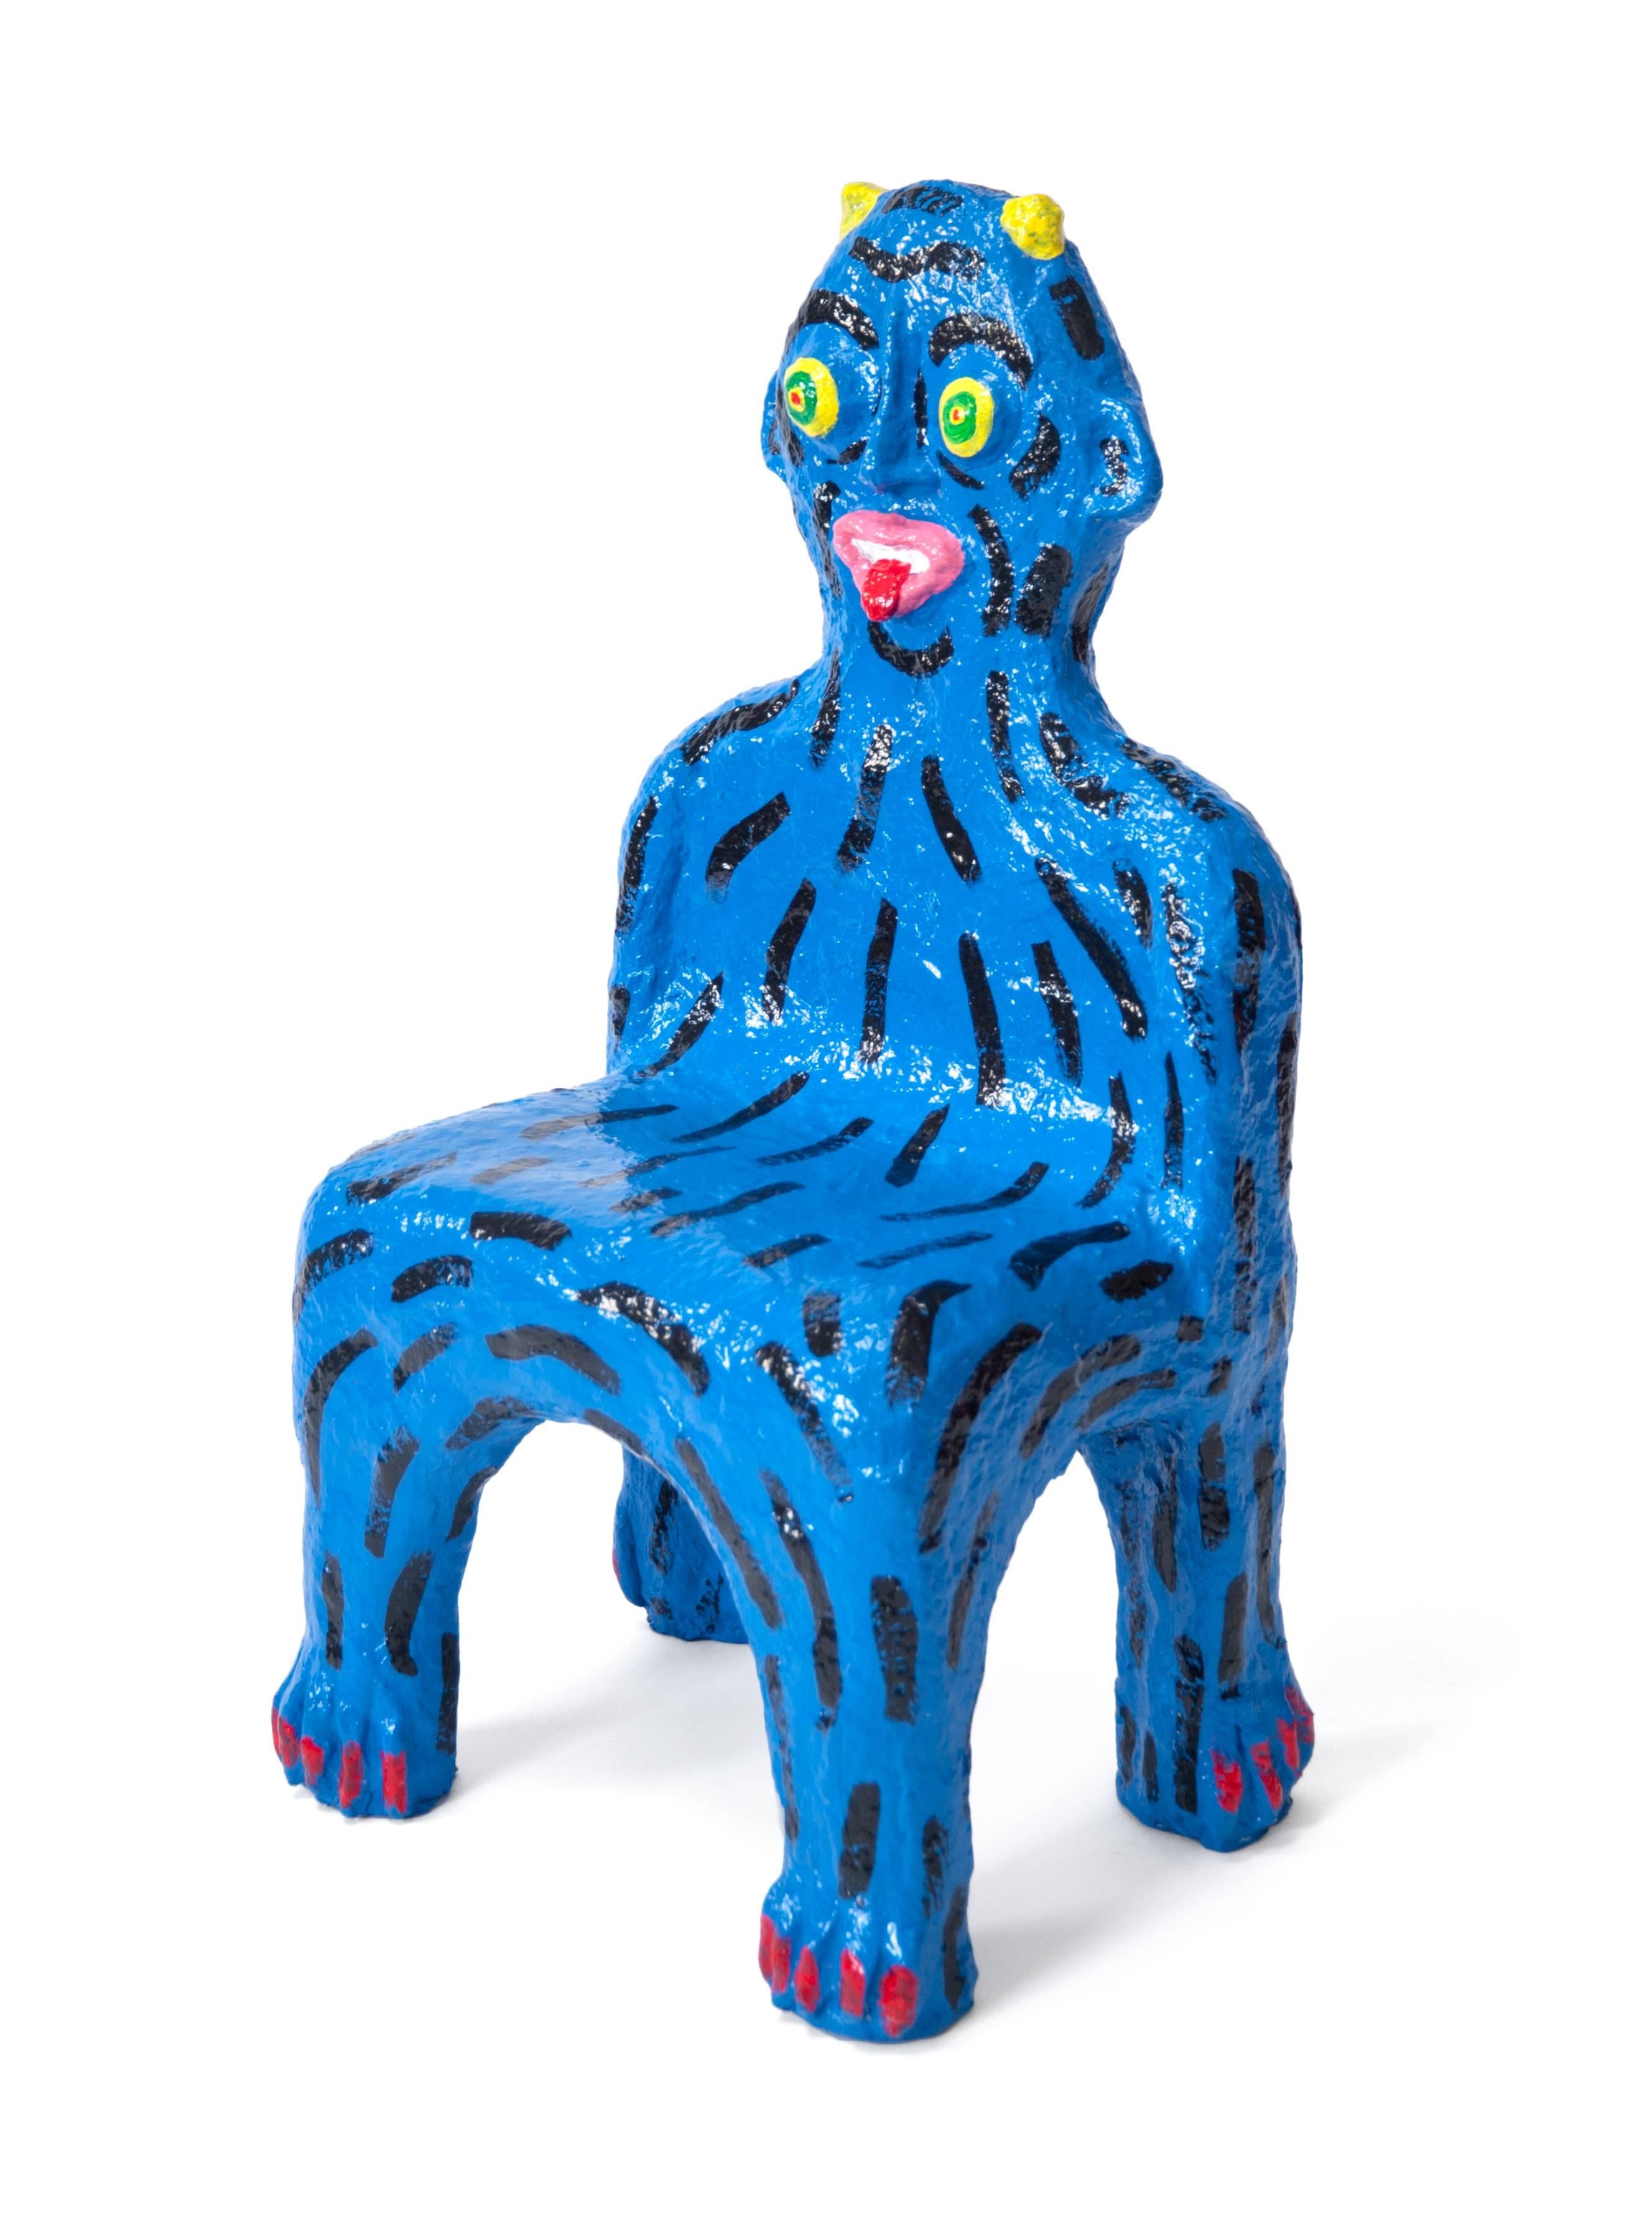 Blue Creature child chair by Brett Douglas Hunter, USA, 2018

Blue Creature child chair
Brett Douglas Hunter, USA, 2018
Papercrete, foam, wire
Measures: H 30 in, W 16 in, D 12 in. Seat H 13 in